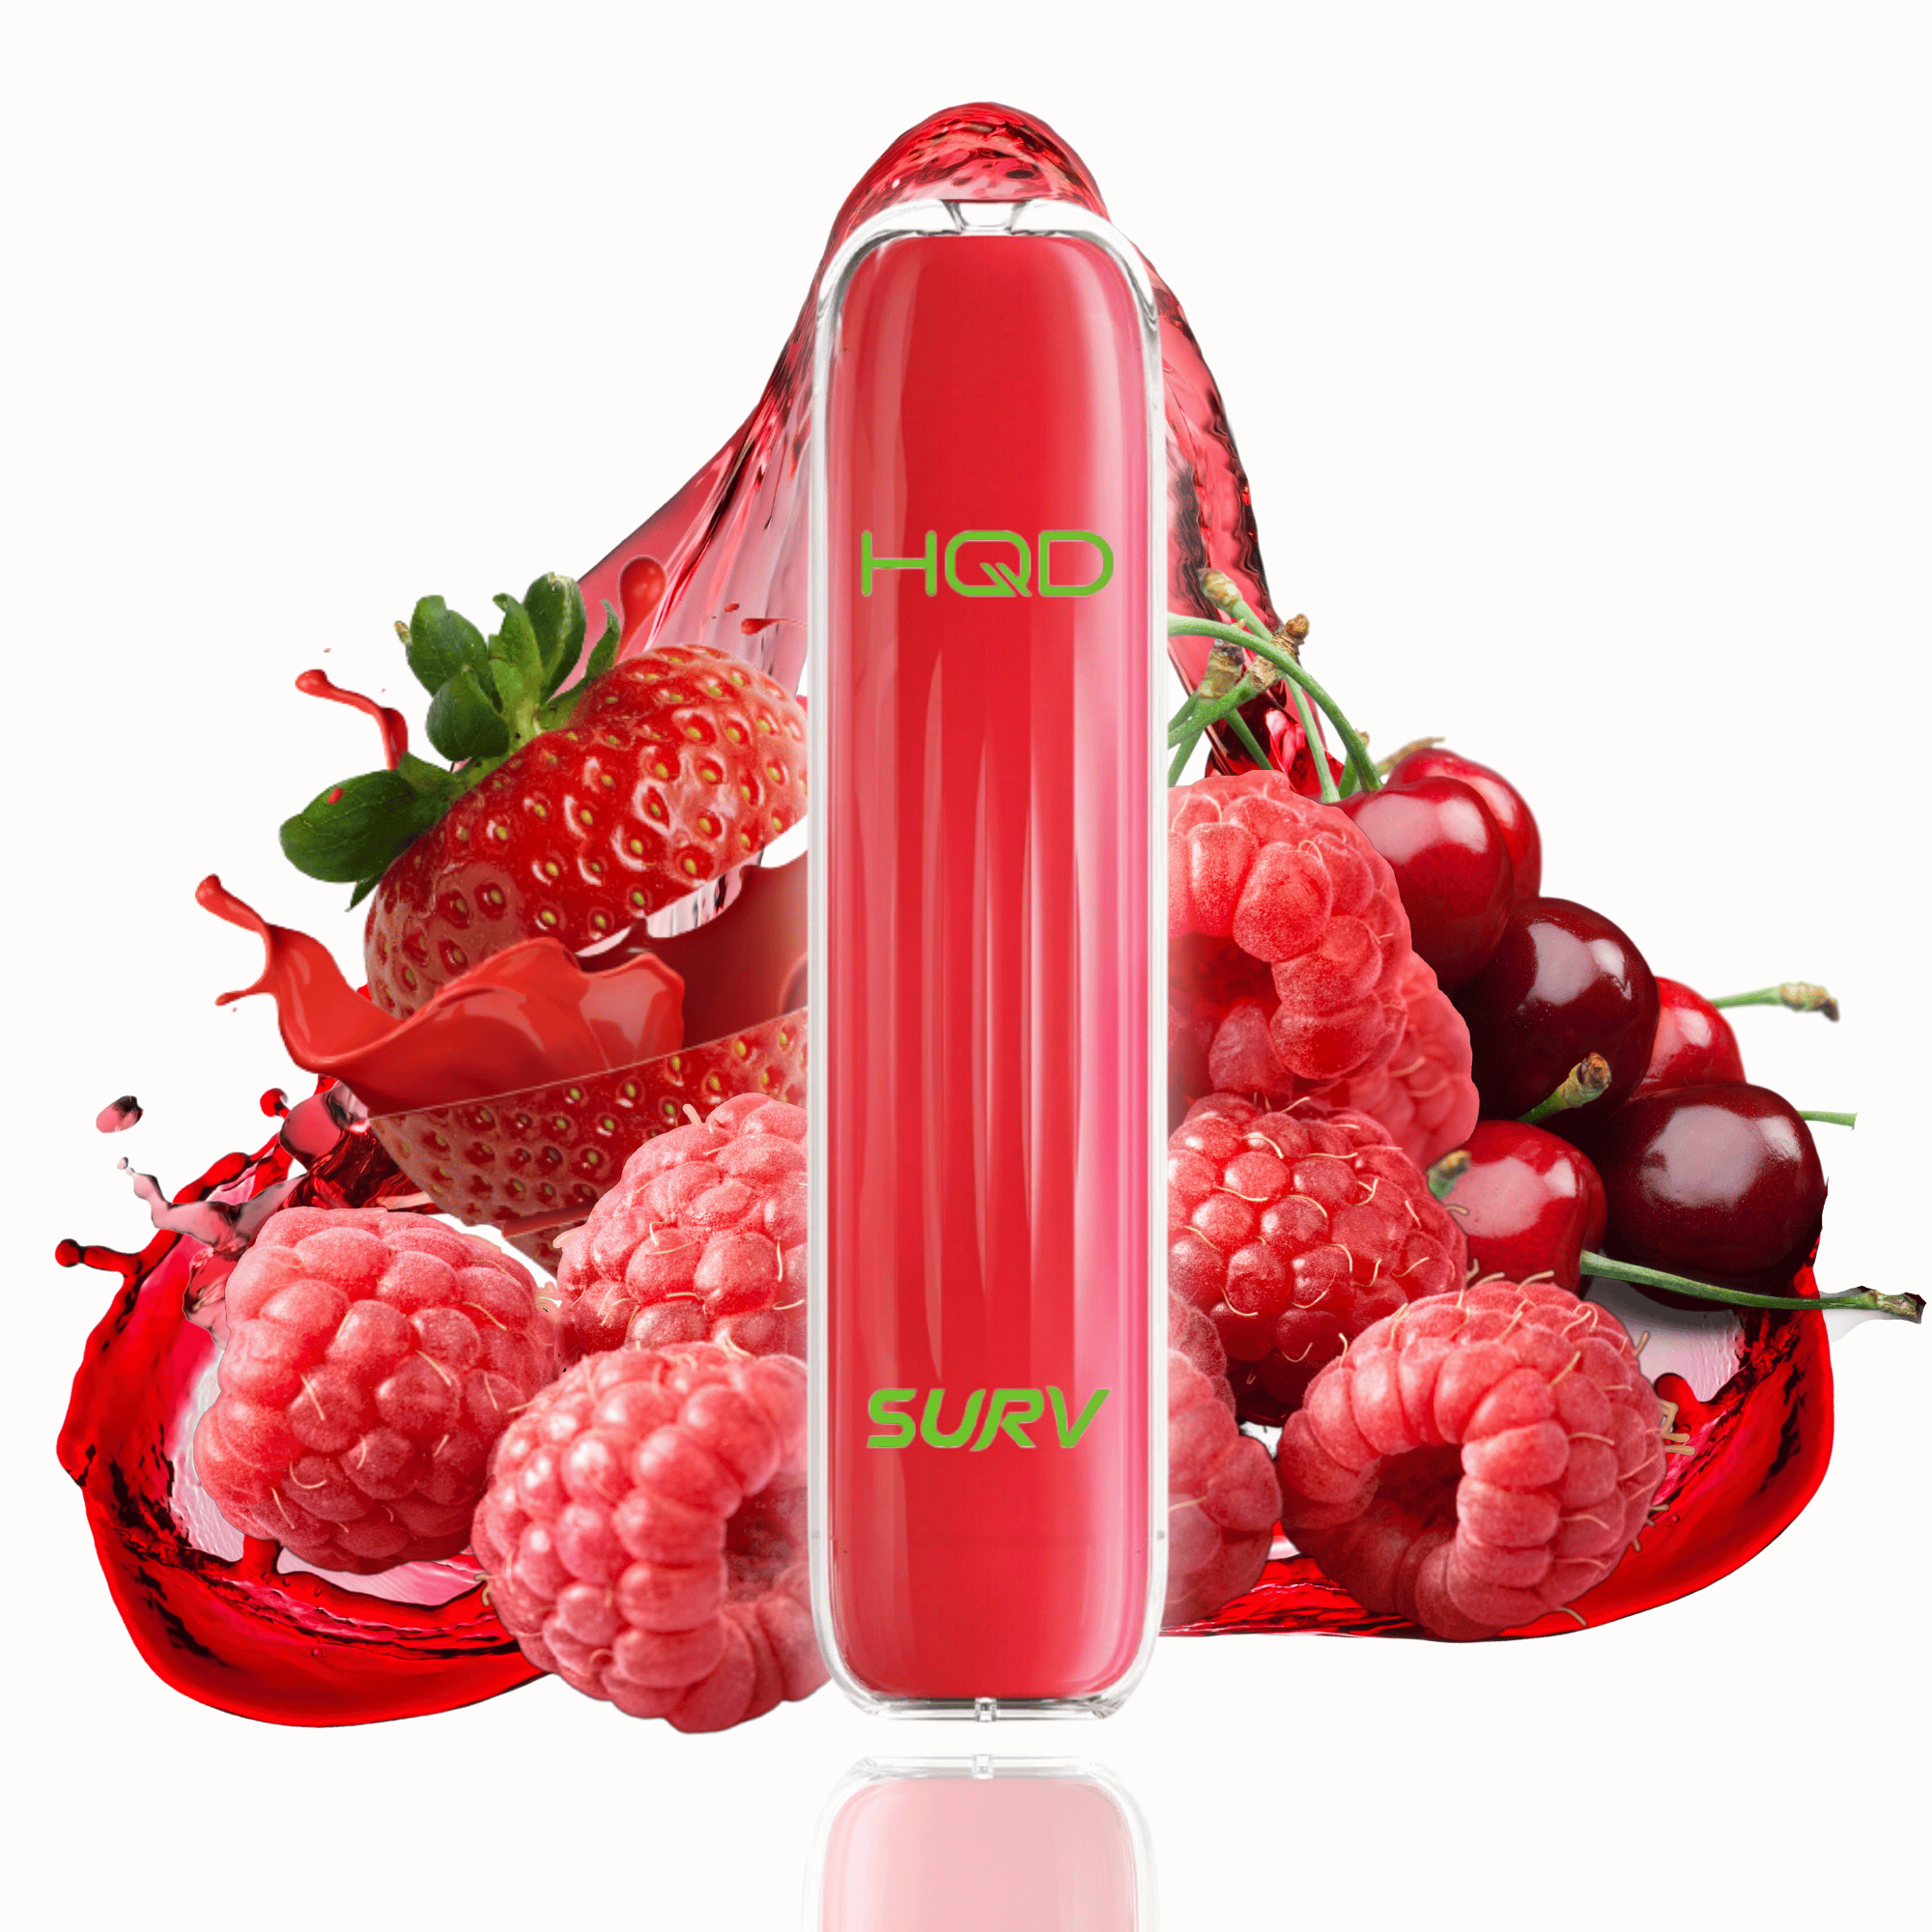 HQD Surv Raspberry Strawberry Cherry 18mg/ml